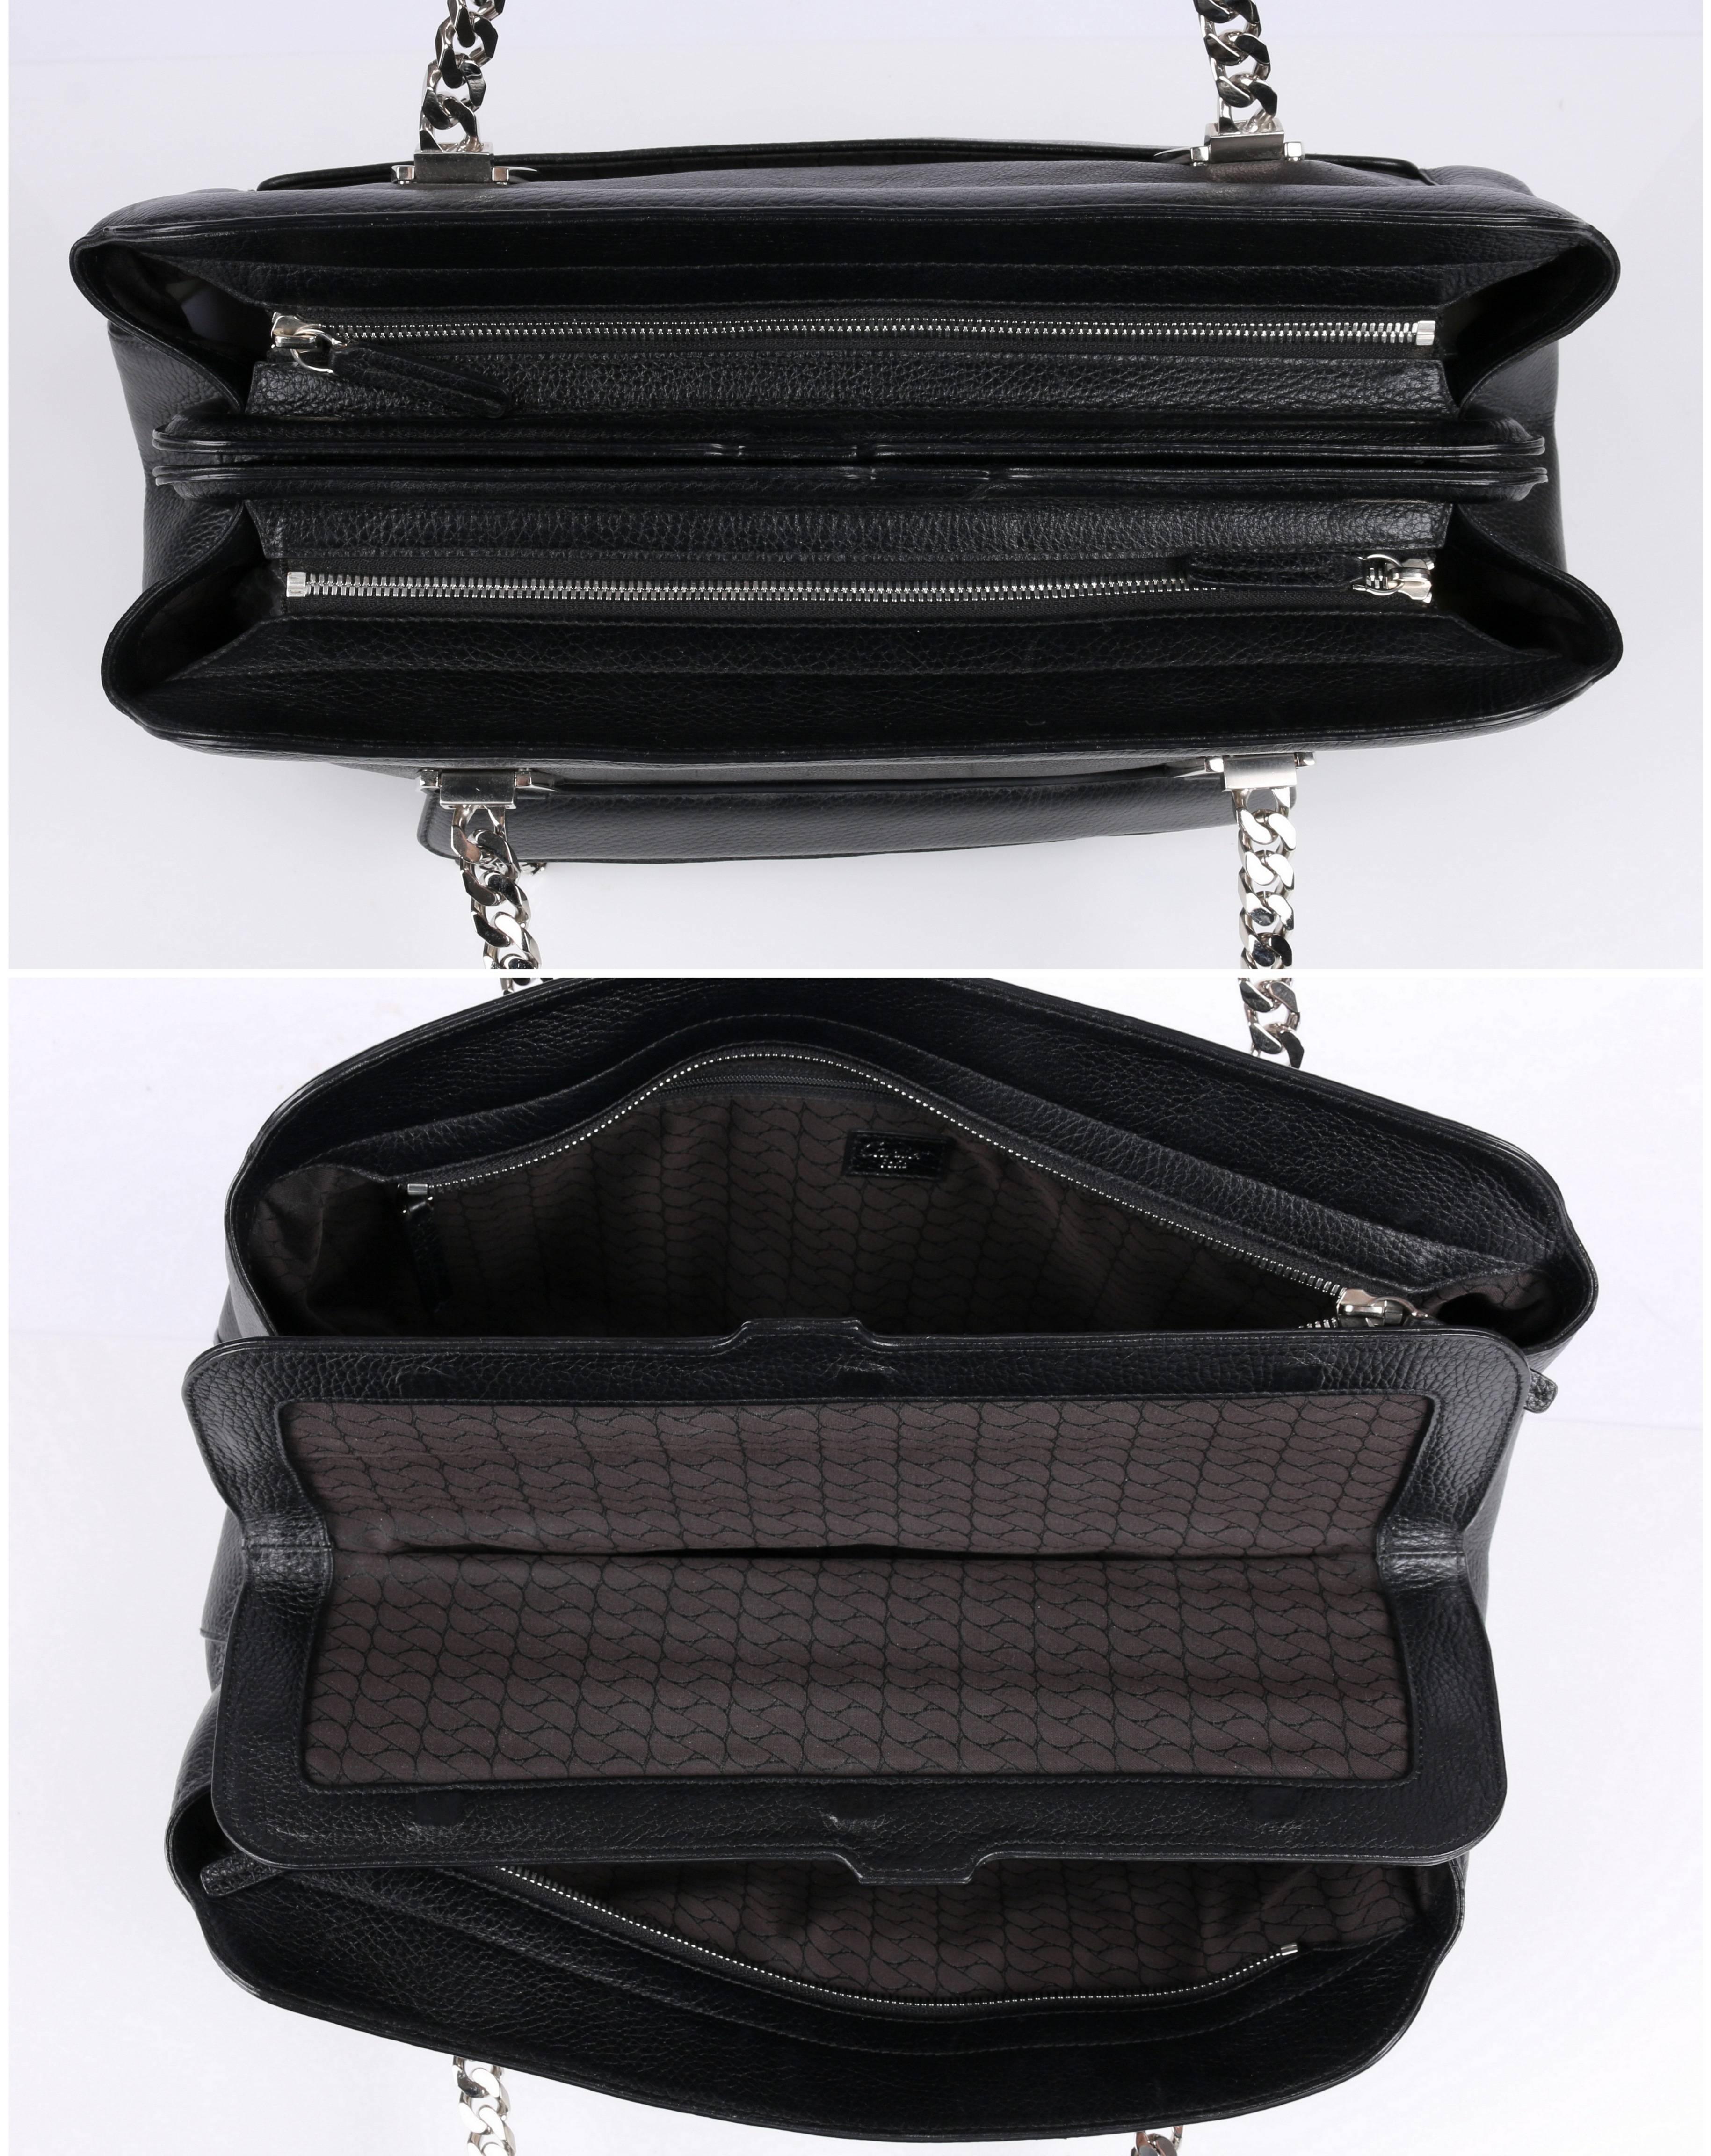 Women's CARTIER Black Textured Leather La Dona Chain Link Satchel Bag Handbag Purse